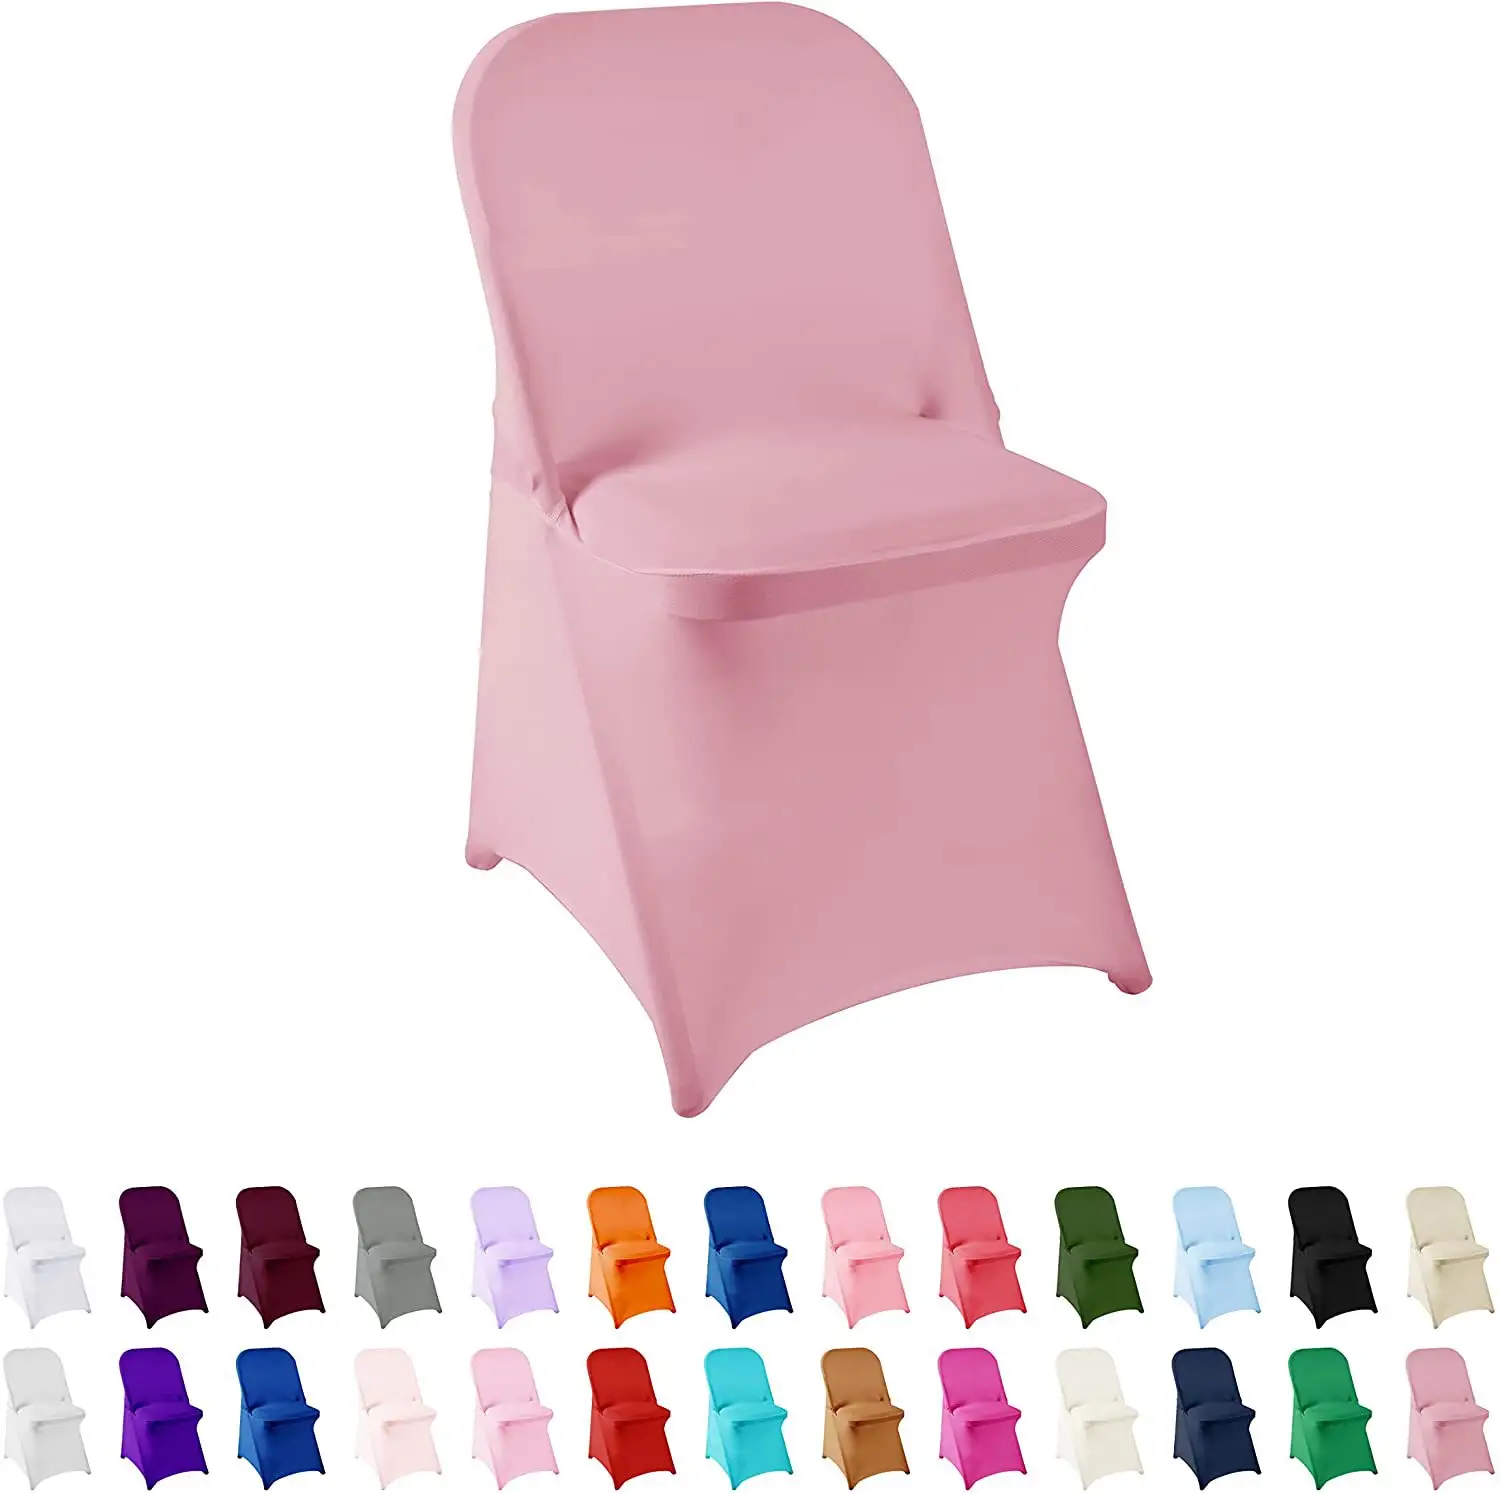 Housse de chaise, venta al por mayor, fundas blancas para sillas elásticas, fundas para sillas plegables de LICRA para fiestas, banquetes, bodas, bodas